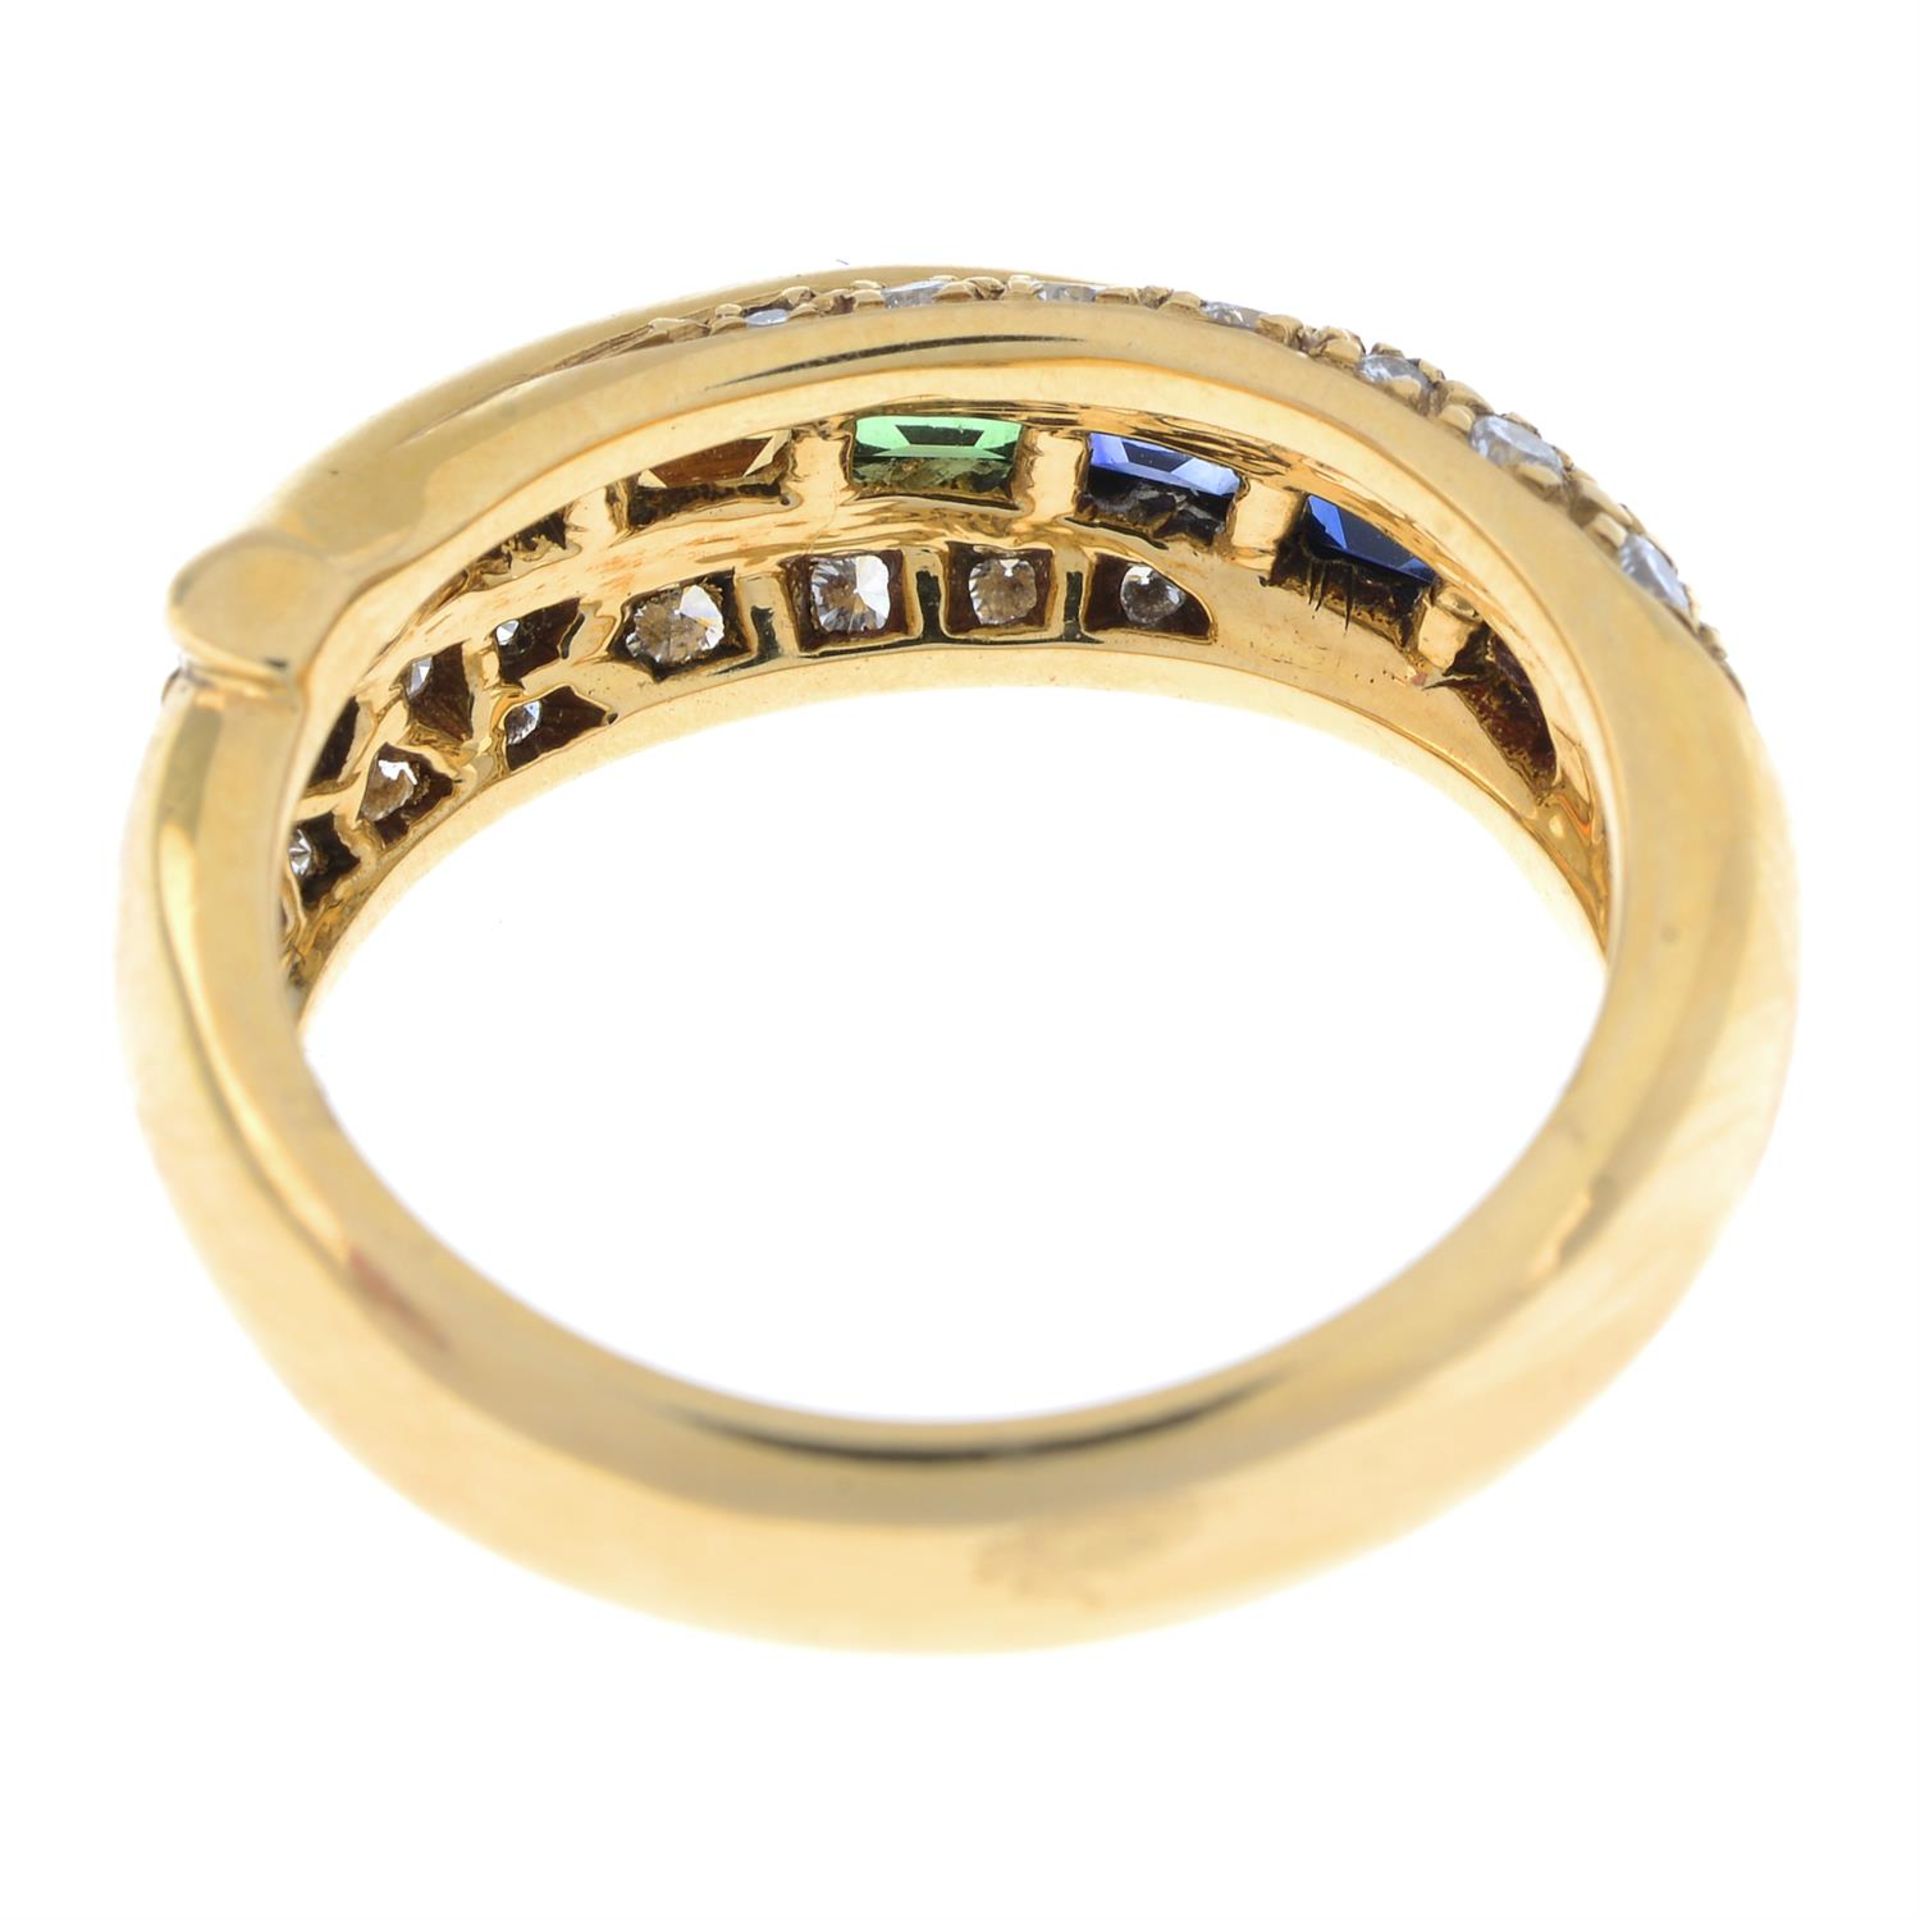 18ct gold vari-hue sapphire & diamond ring - Image 3 of 4